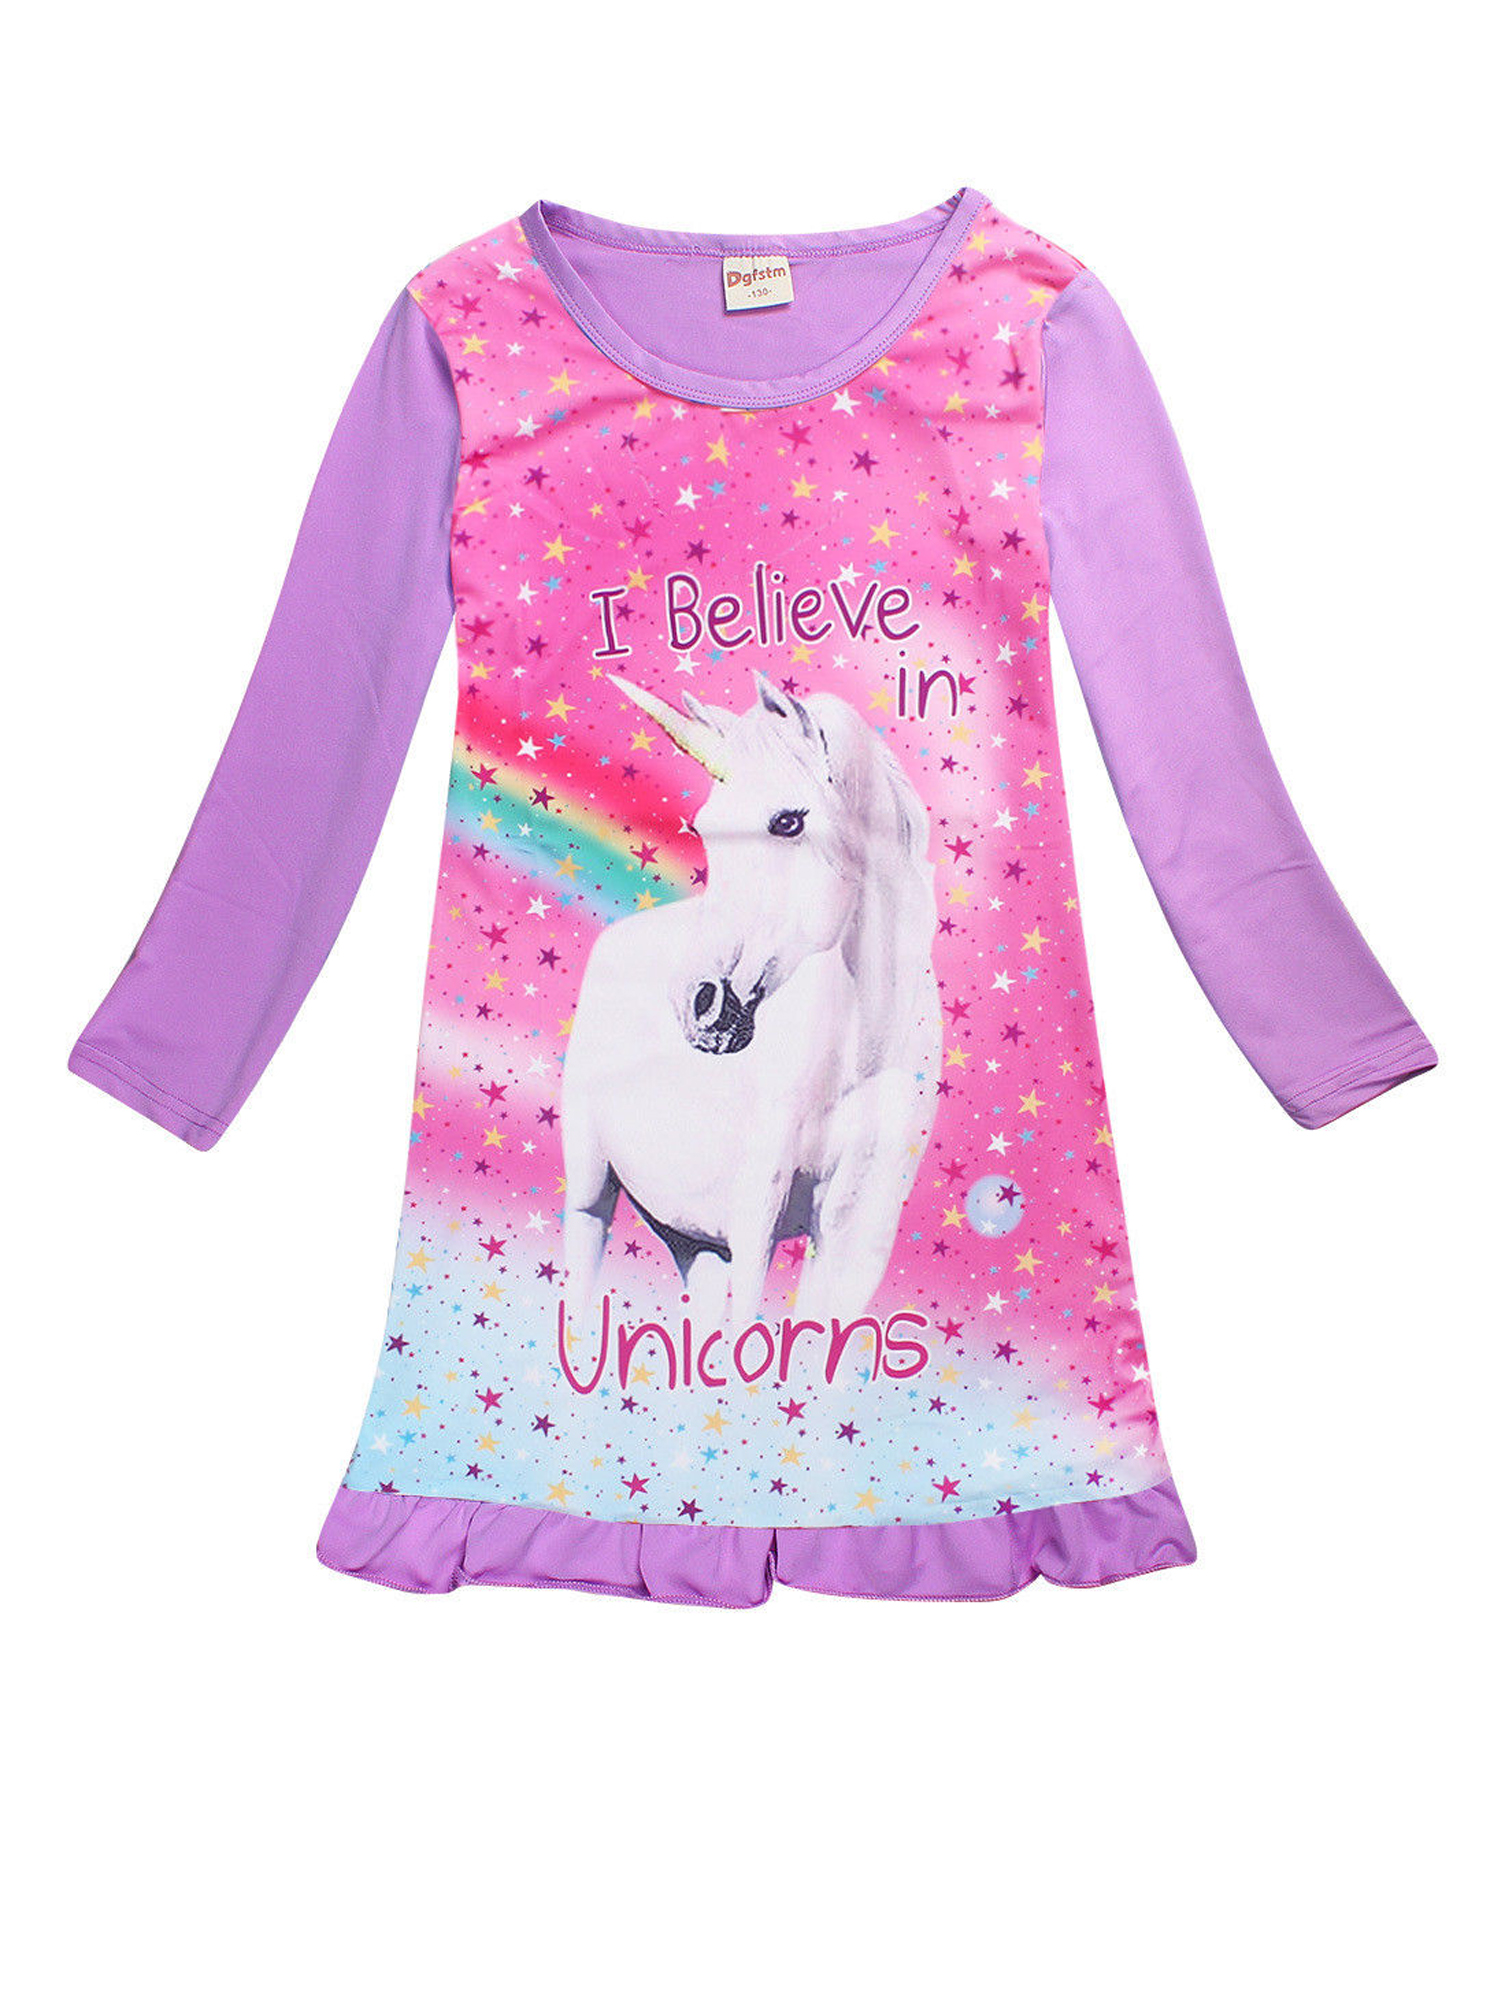 unicorn dress walmart